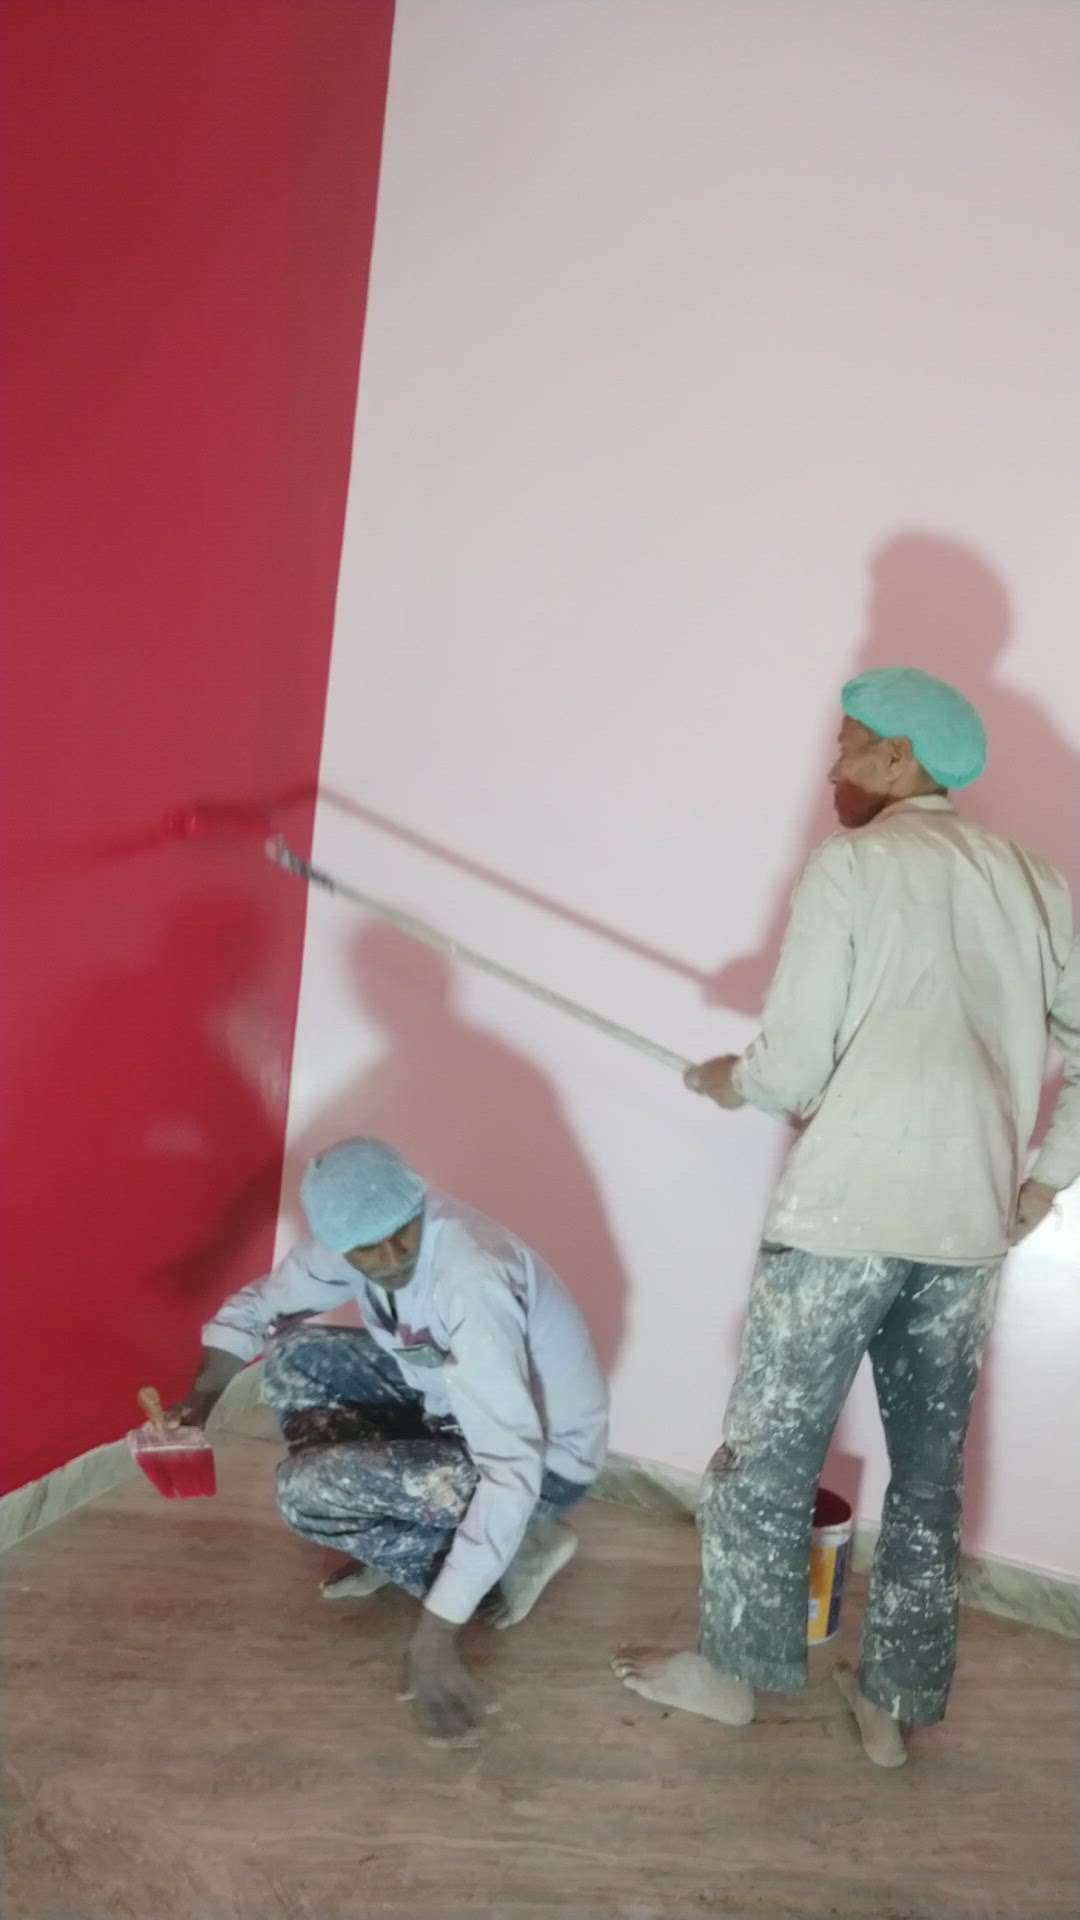 Asian Royal glitz paint Glossi finish super  paint  8387031580 conntact jaipur  #asianpaint  #royalglitz  #royalshine  #royalaspira  #royallife  #WallPainting  #kolohindi  #kolopost  #koloviral  #kolo-ed  #koloindia